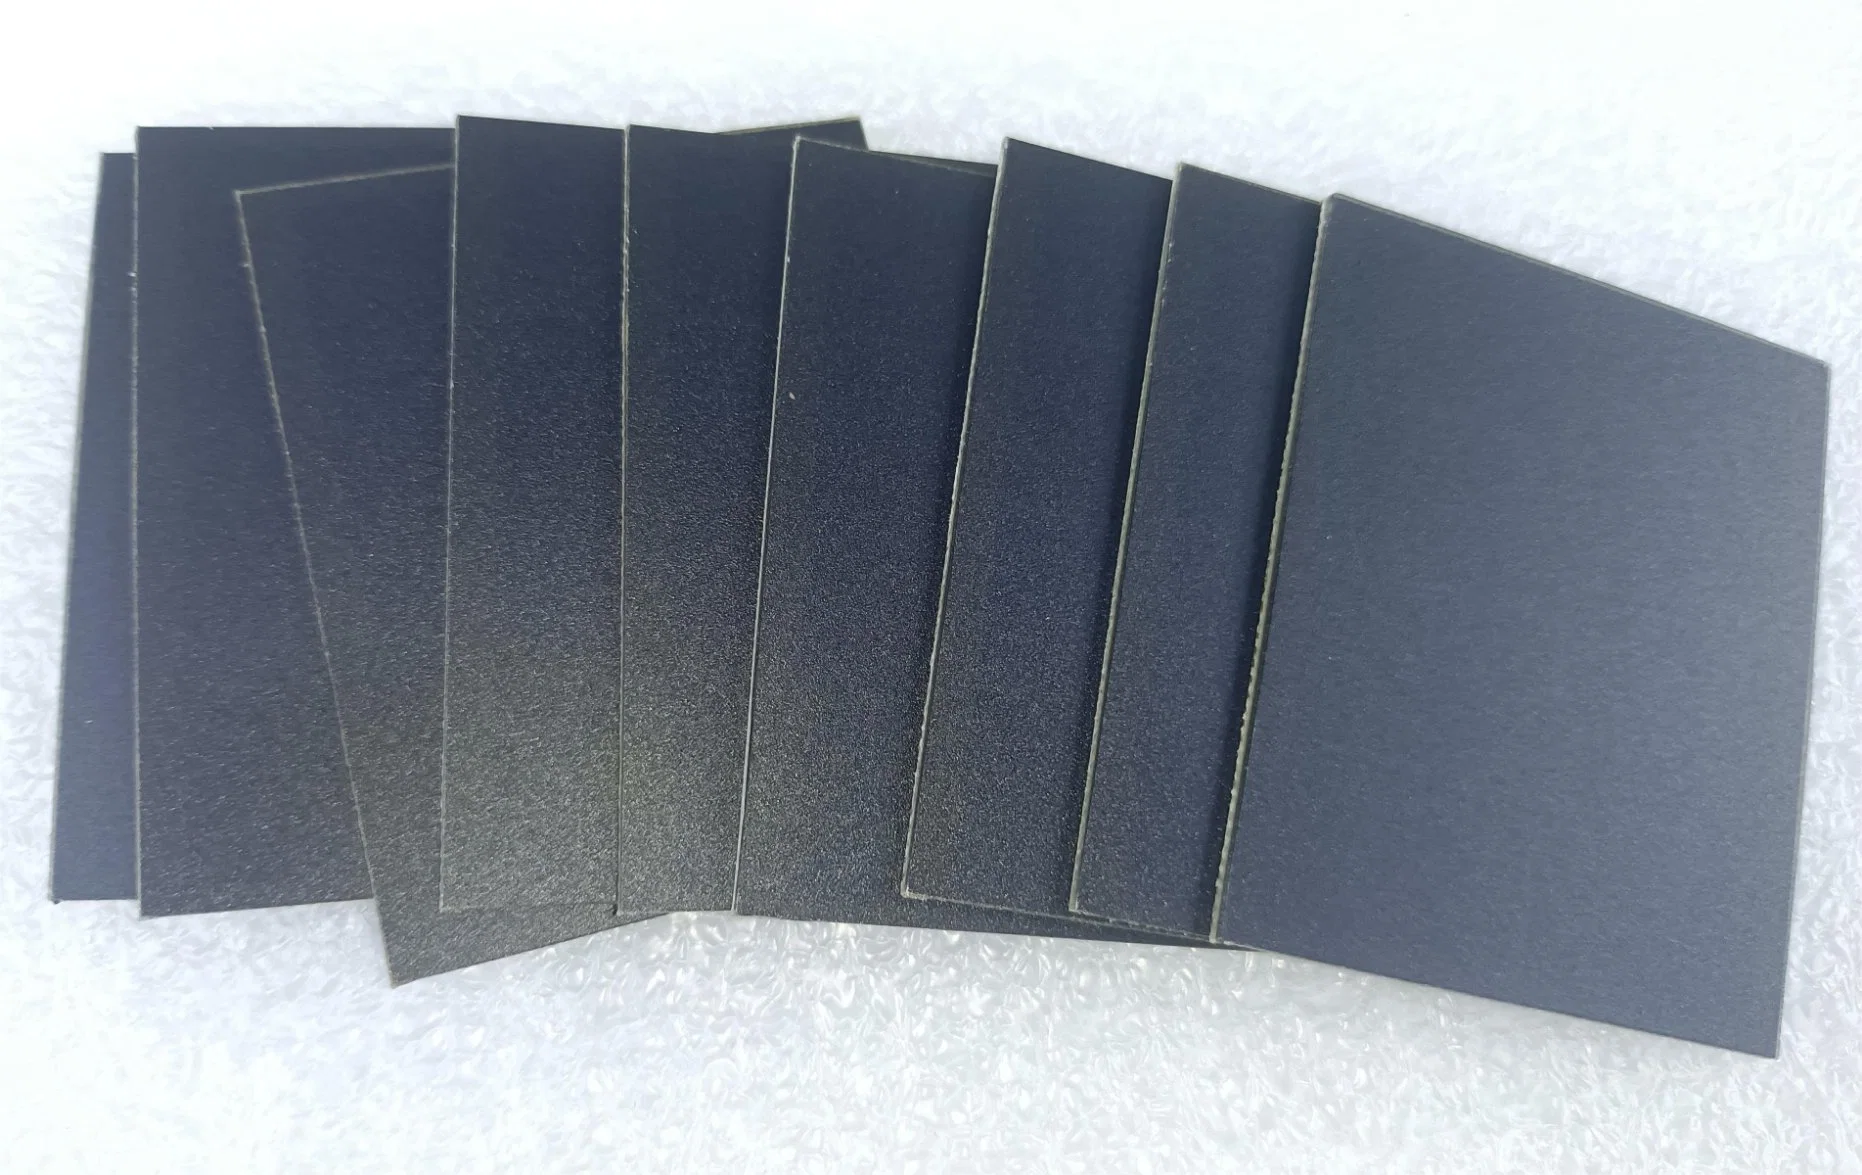 Mini Thin Film ETFE، متجمد، سطح زجاجي، مونو PV مدعوم من الوحدة 1-12W أشكال مخصصة 12 فولت لوحة شمسية صغيرة - خلية ضوئية أحادية اللون عالية الكفاءة من السيليكون